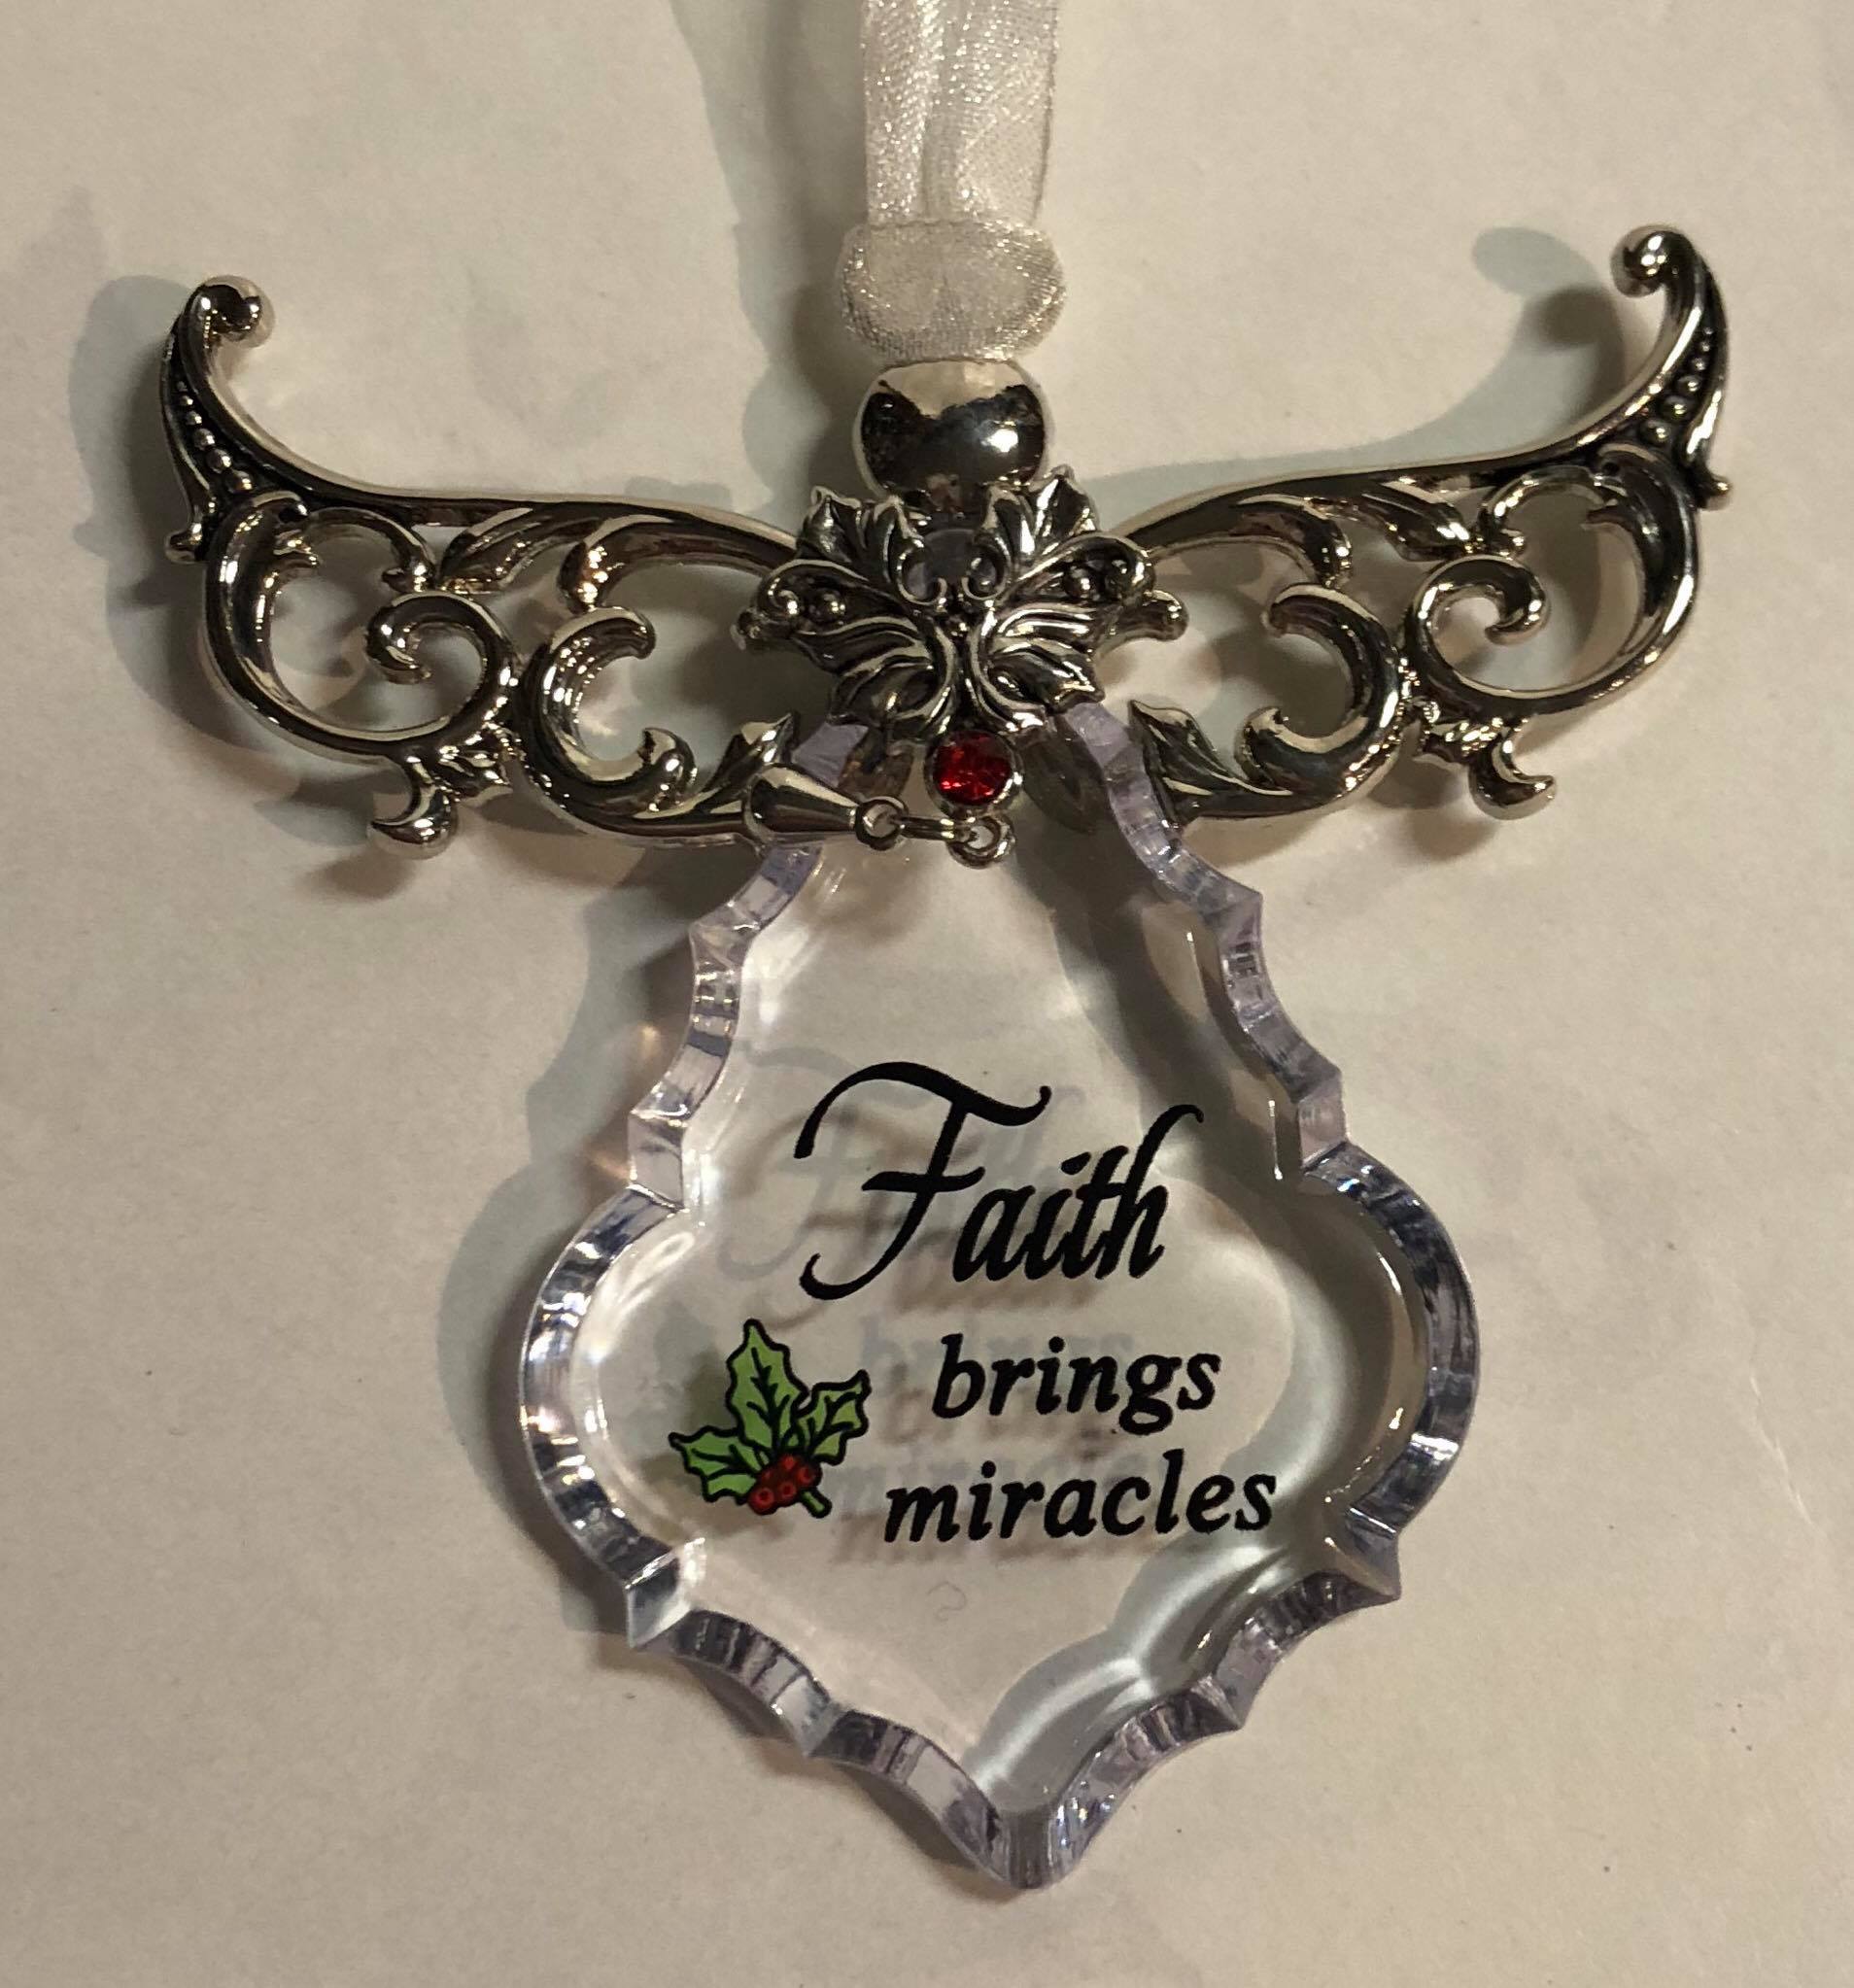 Acrylic Angel Tree Ornament "Faith brings miracles"